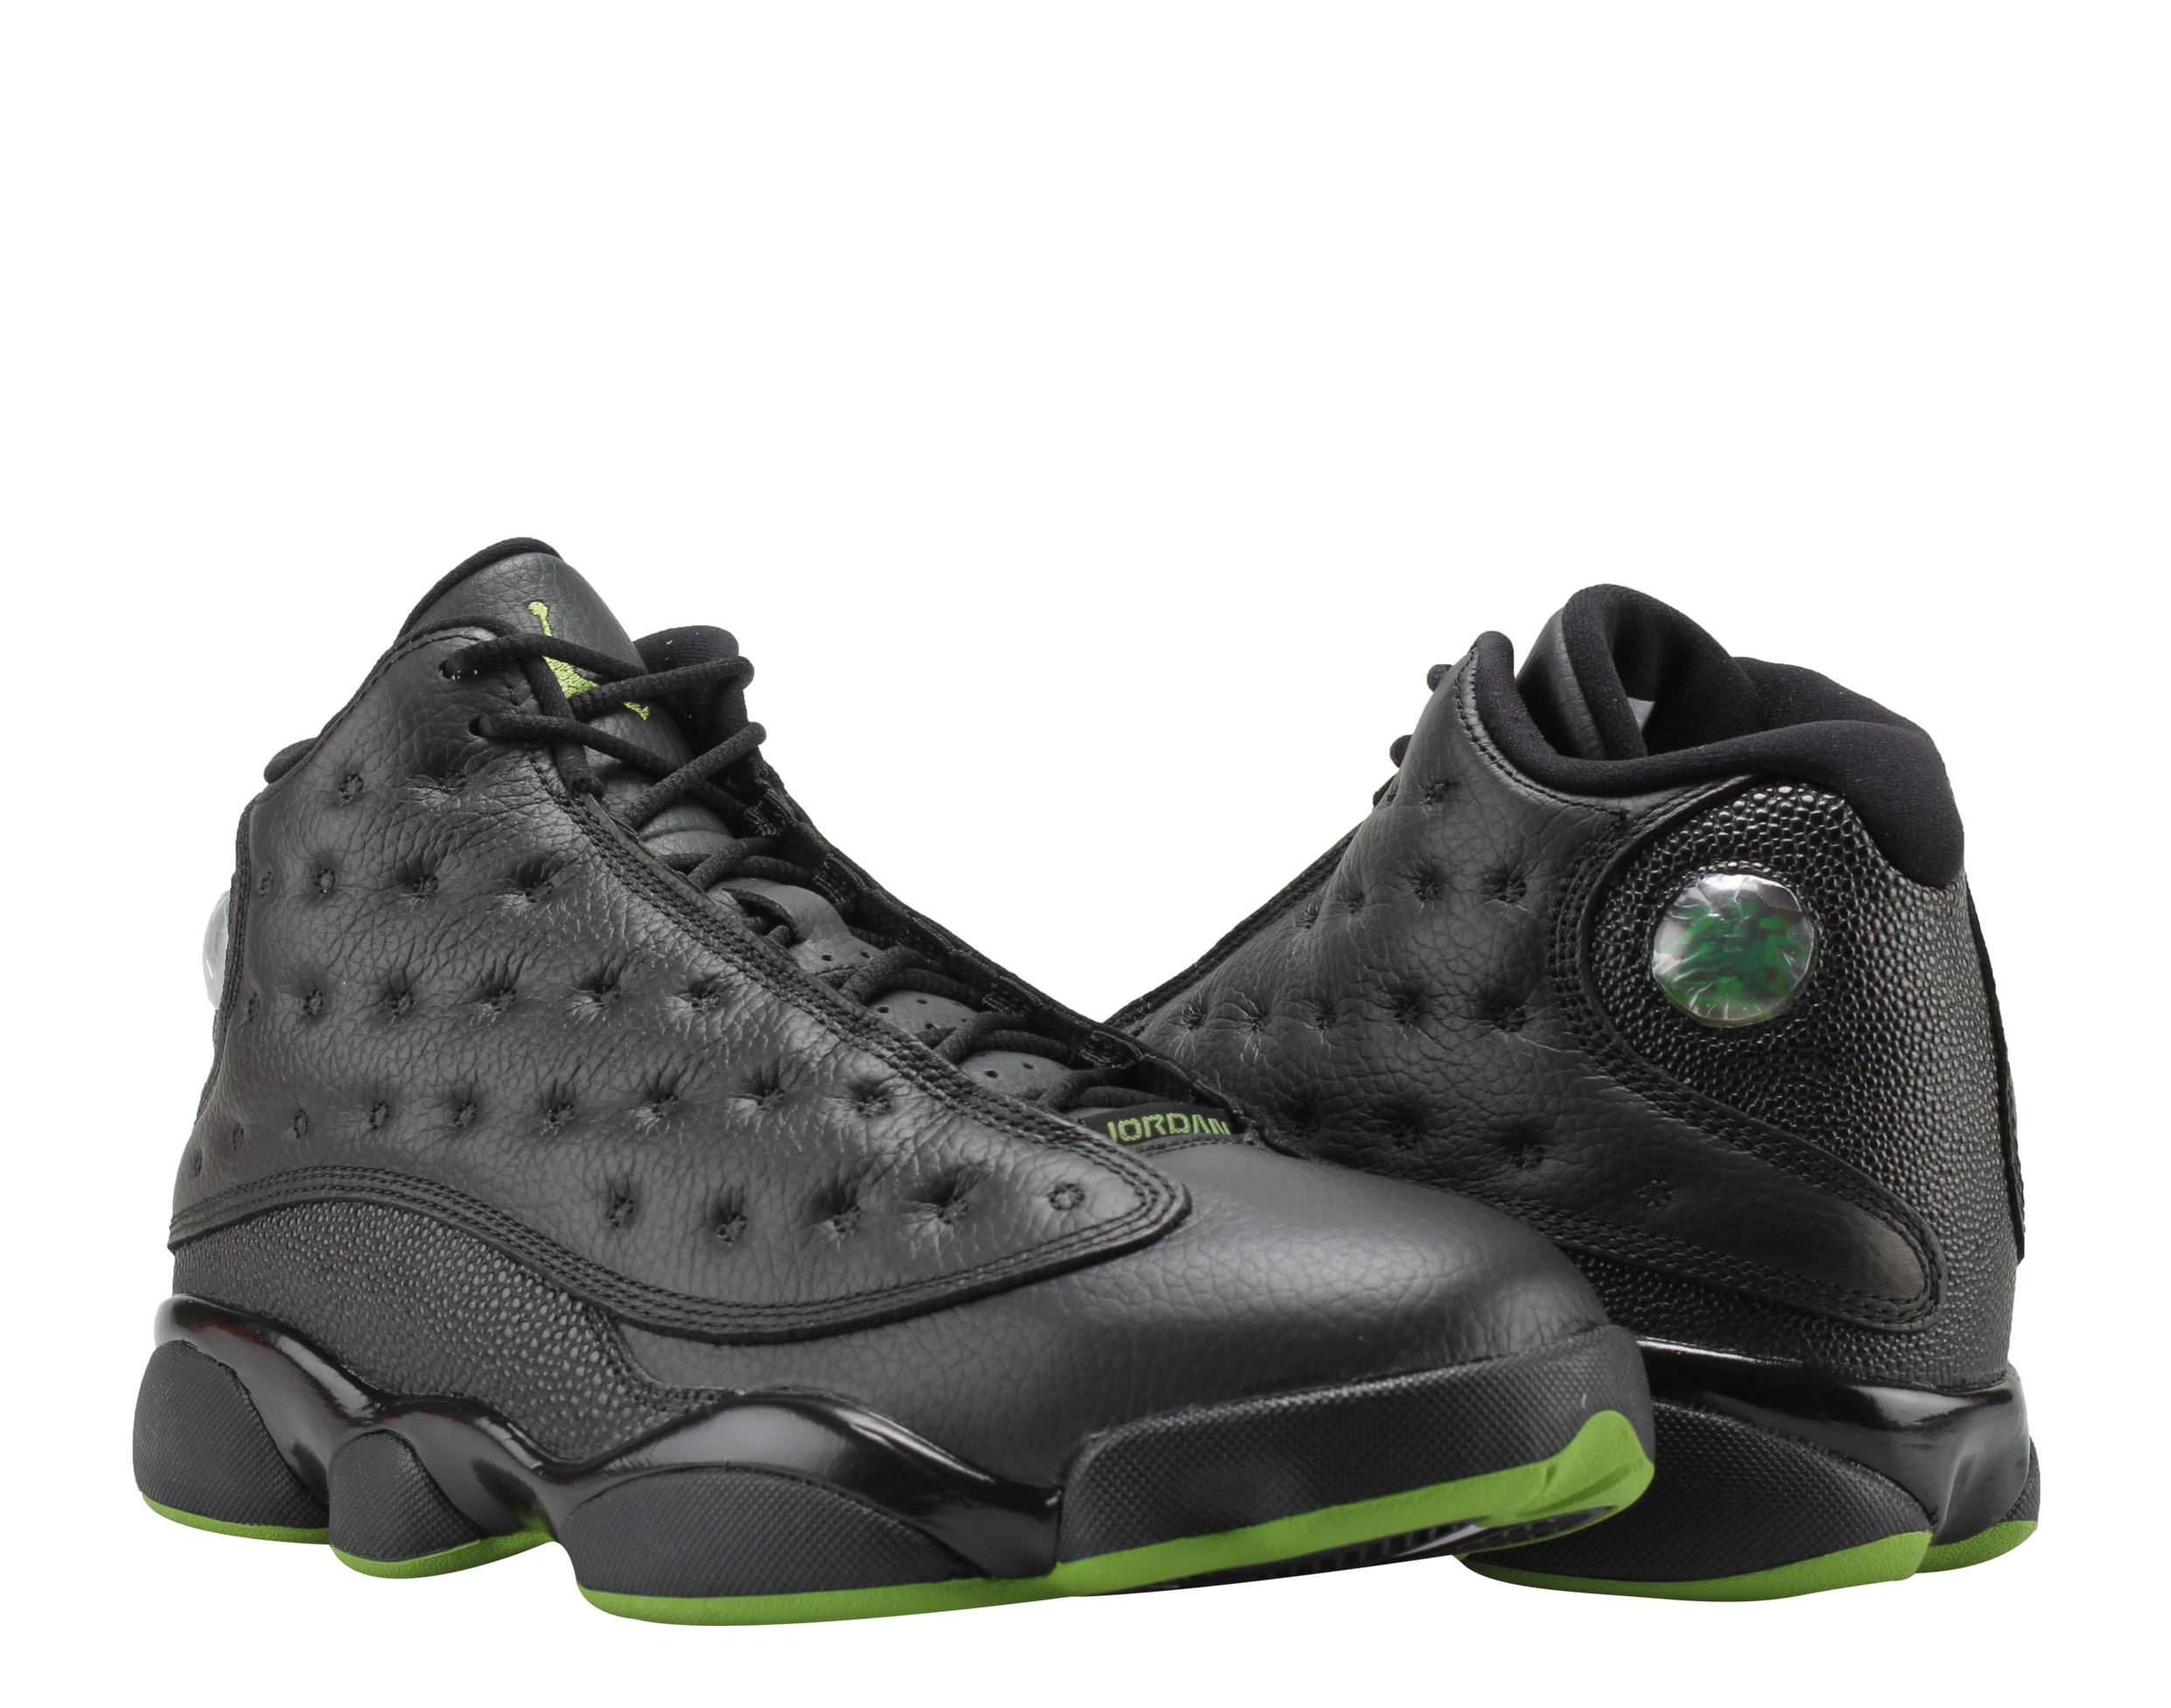 Nike Air Jordan 13 Retro Men's Basketball Shoes Size 11 - image 1 of 6